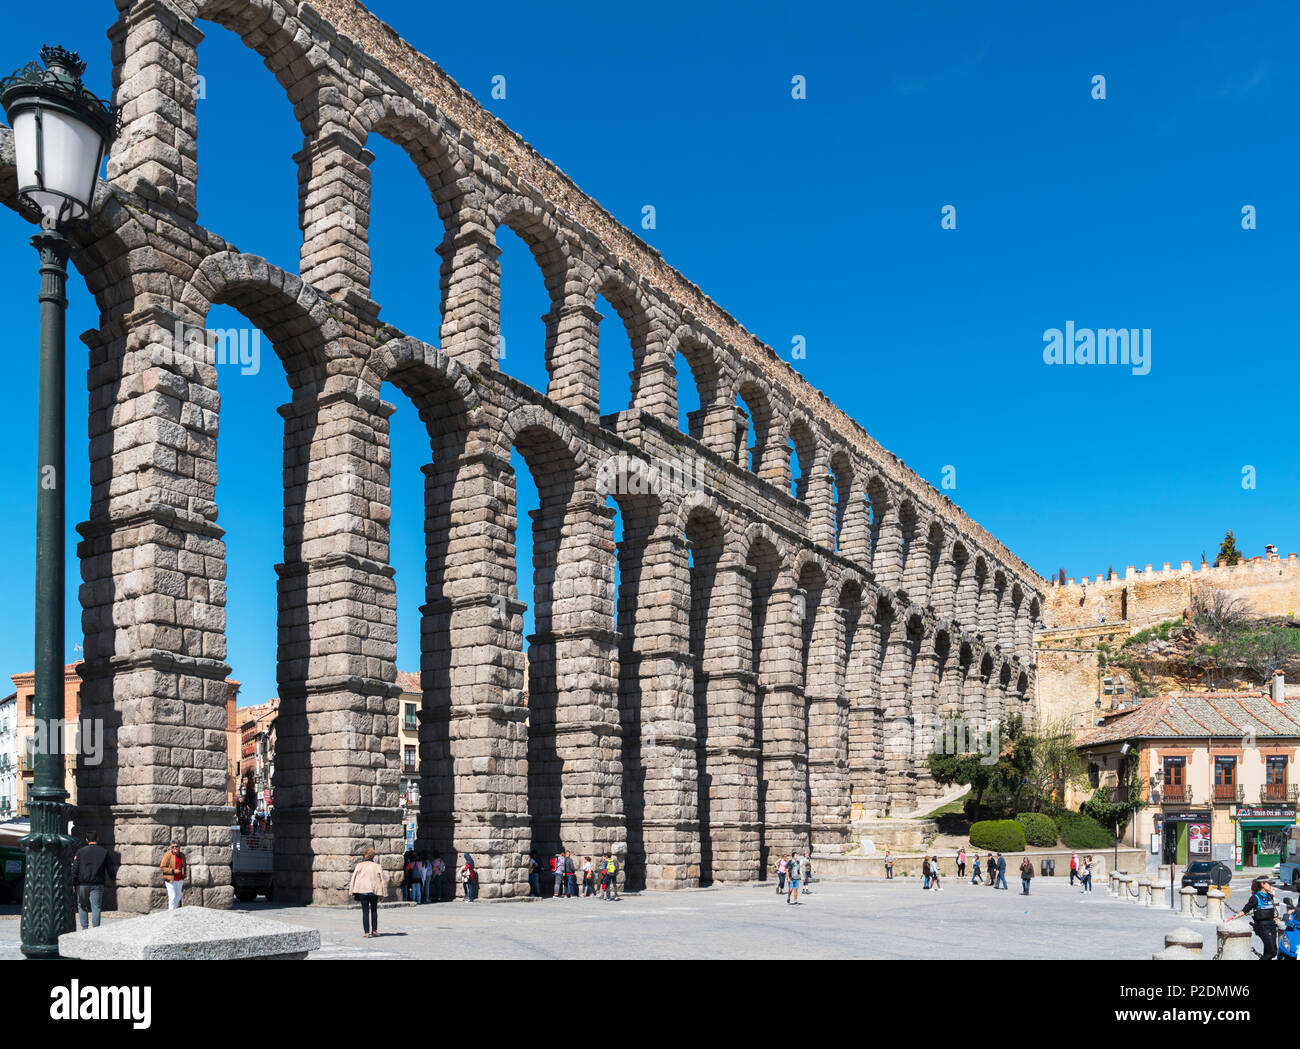 Segovia Aqueduct. Die 1 Tiziano römische Aquädukt von der Plaza Artilleria, Segovia, Spanien Stockfoto